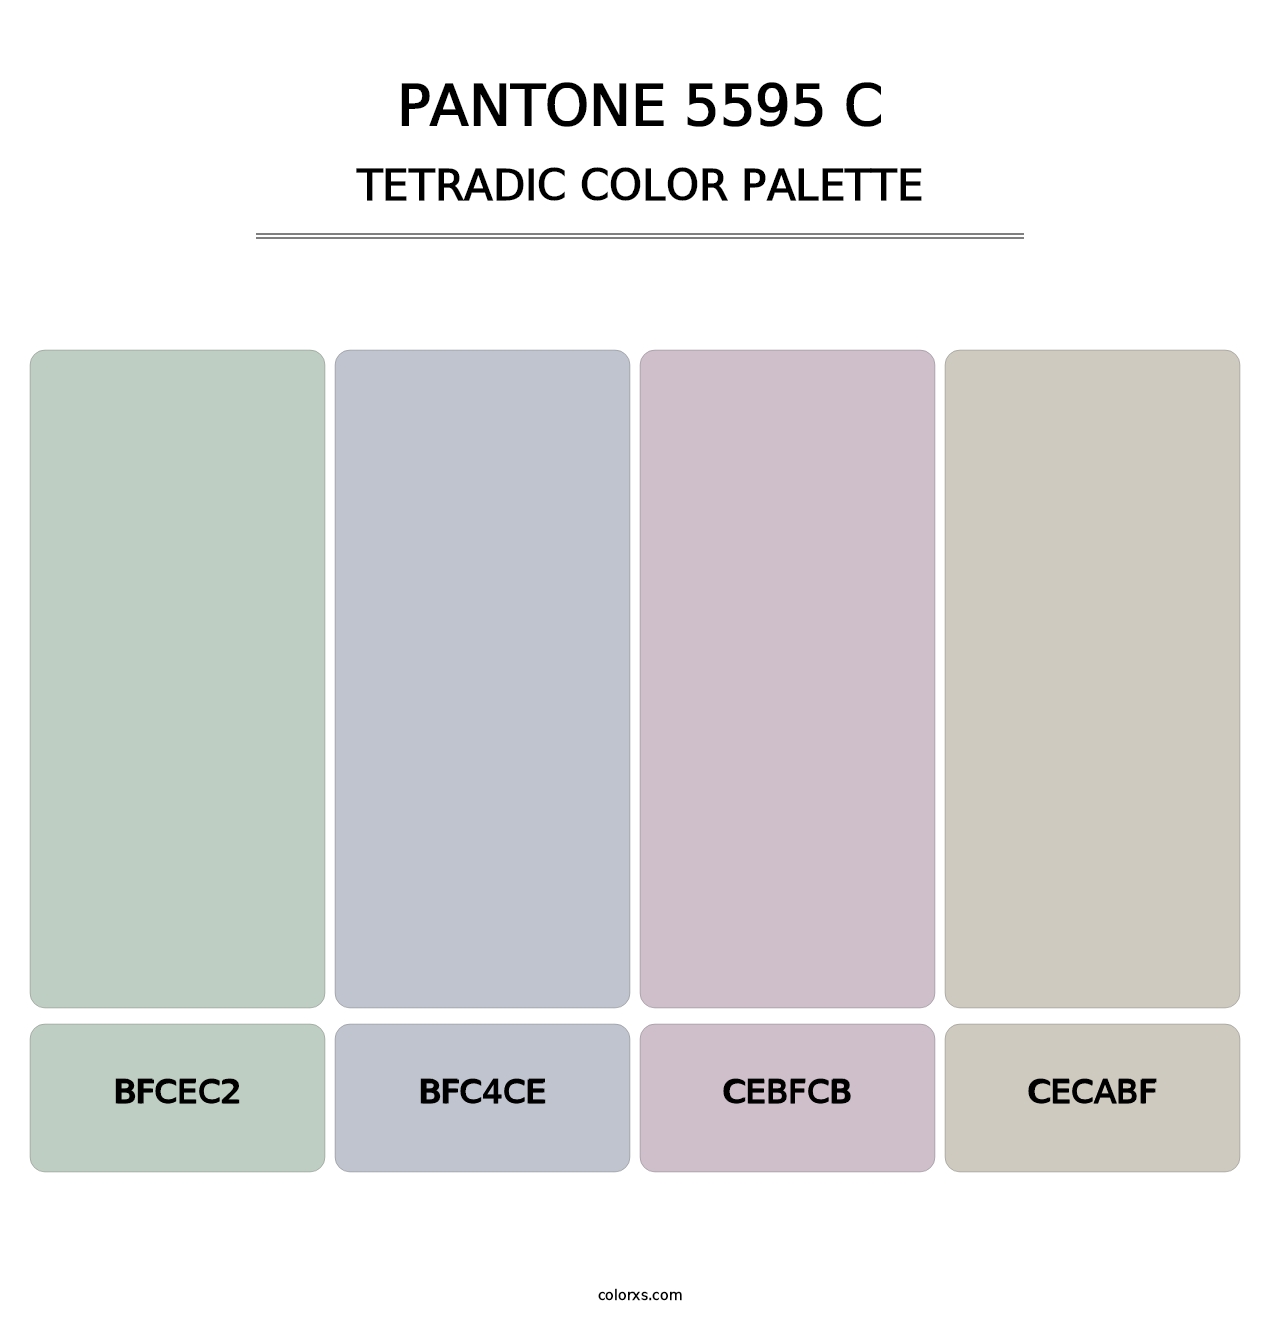 PANTONE 5595 C - Tetradic Color Palette